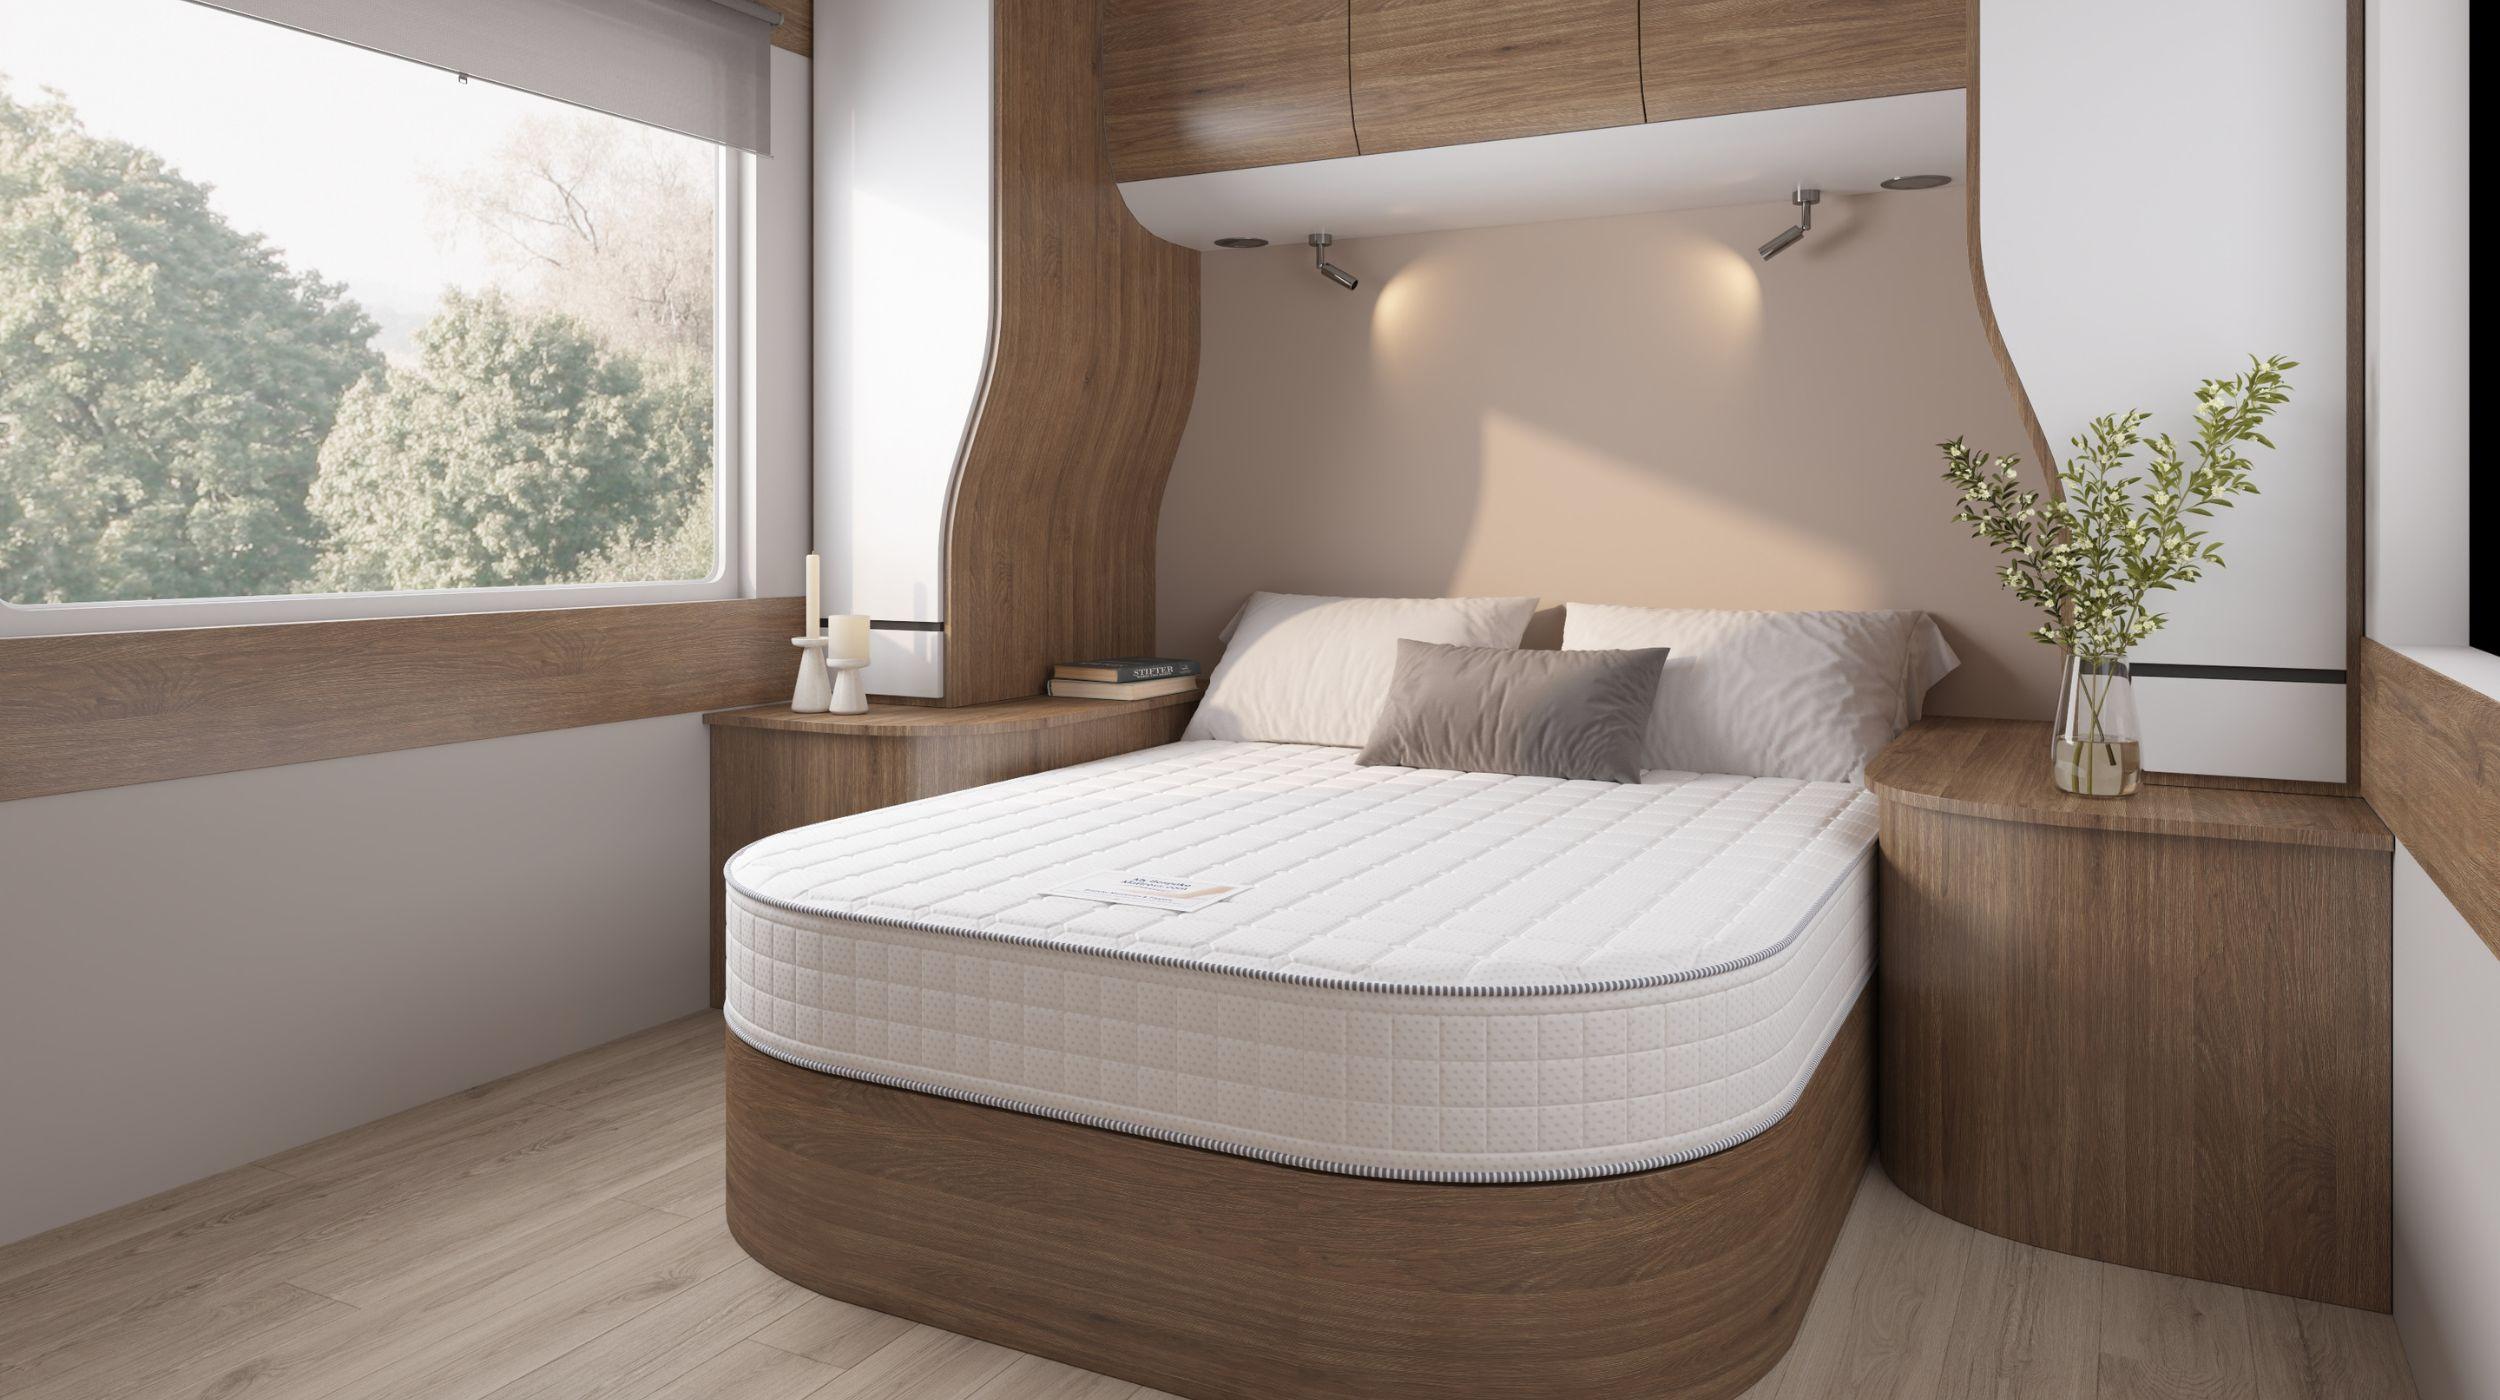 Custom-shaped island bed mattress showcased within a spacious and modern caravan.